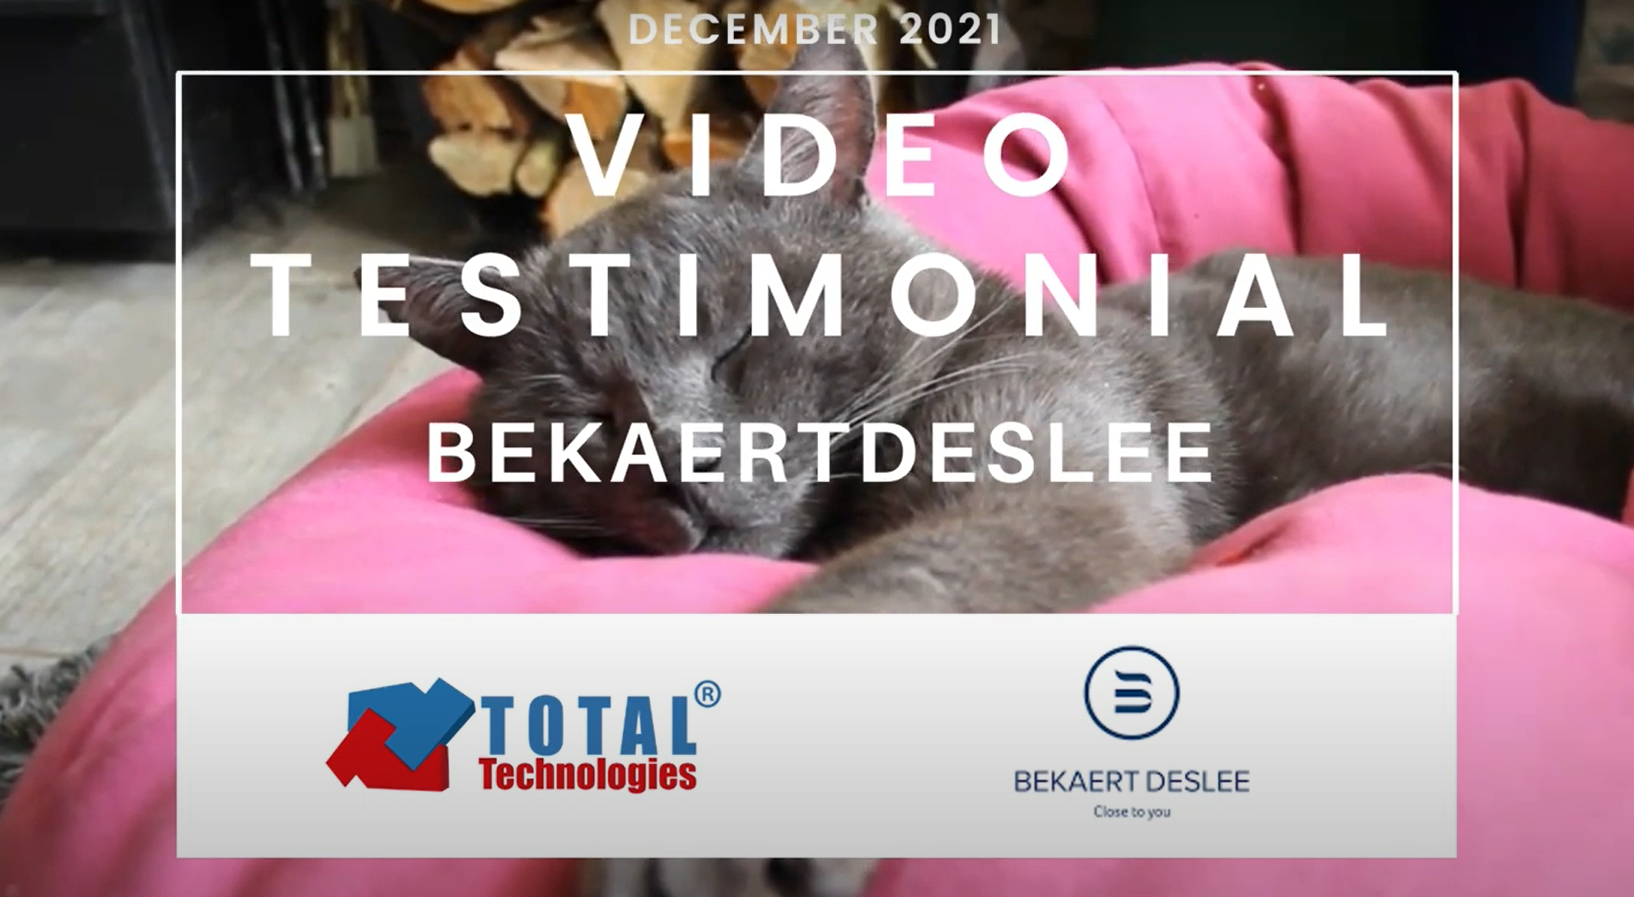 8 years of successful partnership: Total Technologies and BekaertDeslee